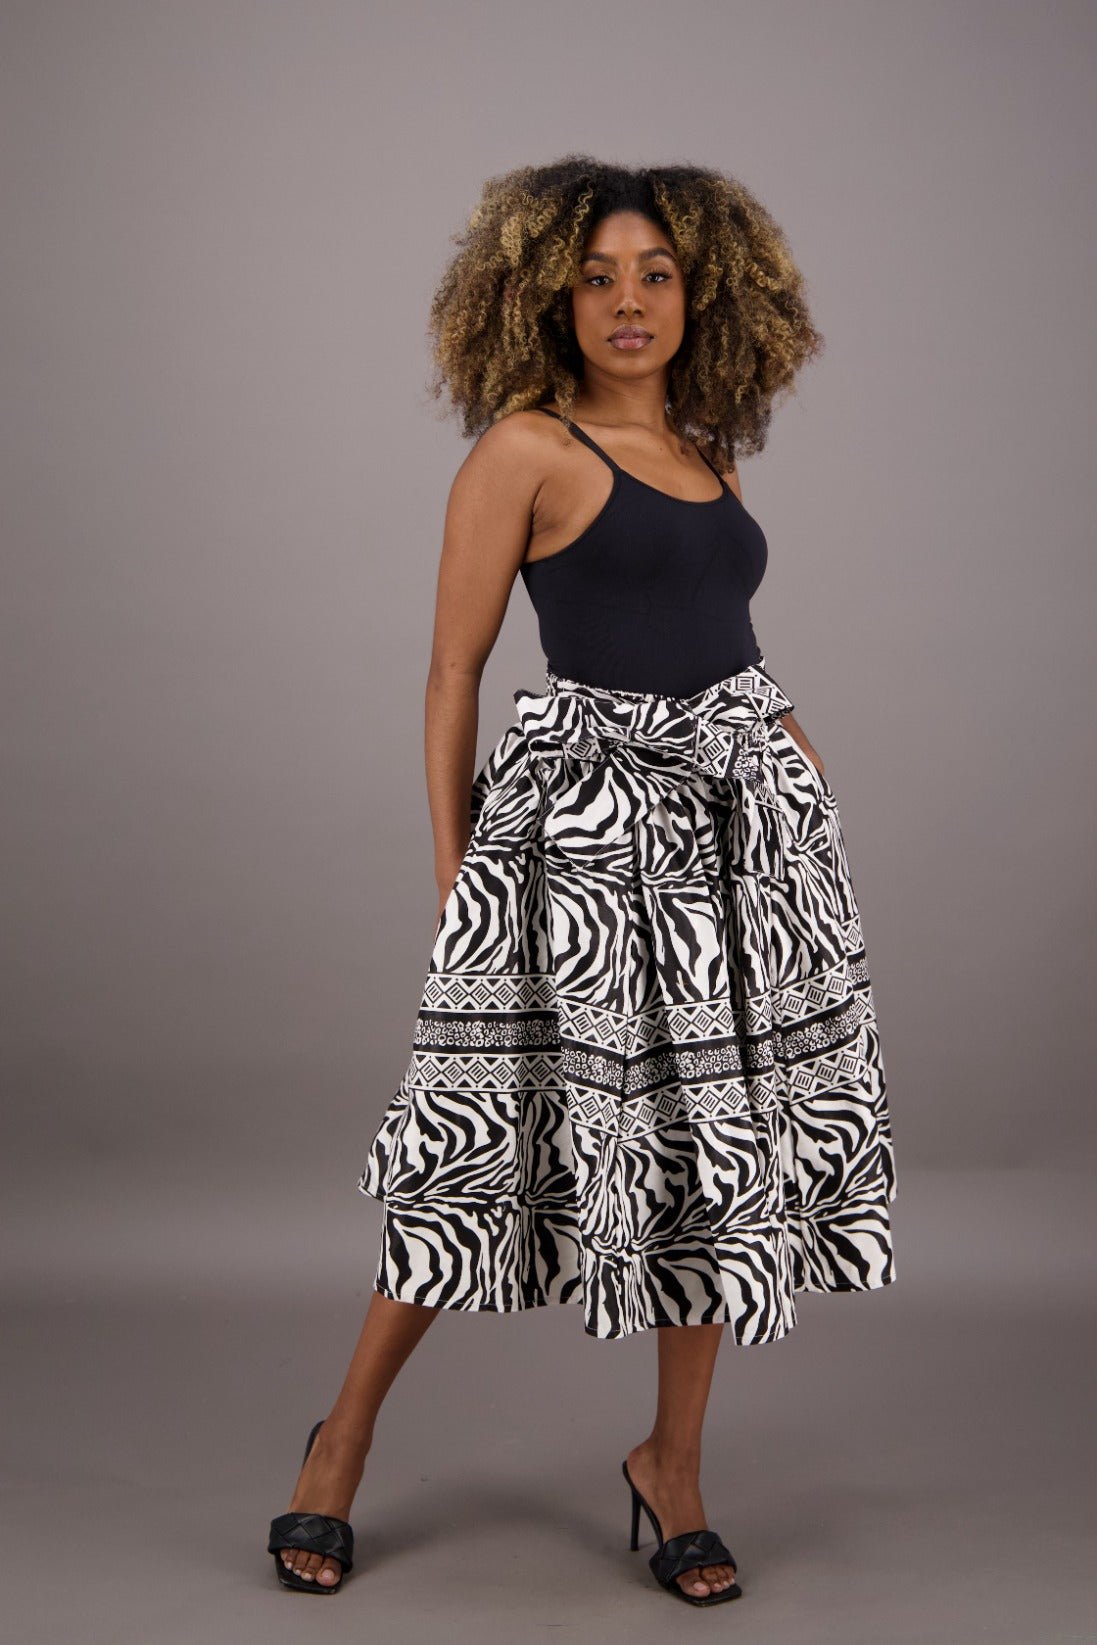 Mid-Length African Print Skirt 16321-261 - Advance Apparels Inc